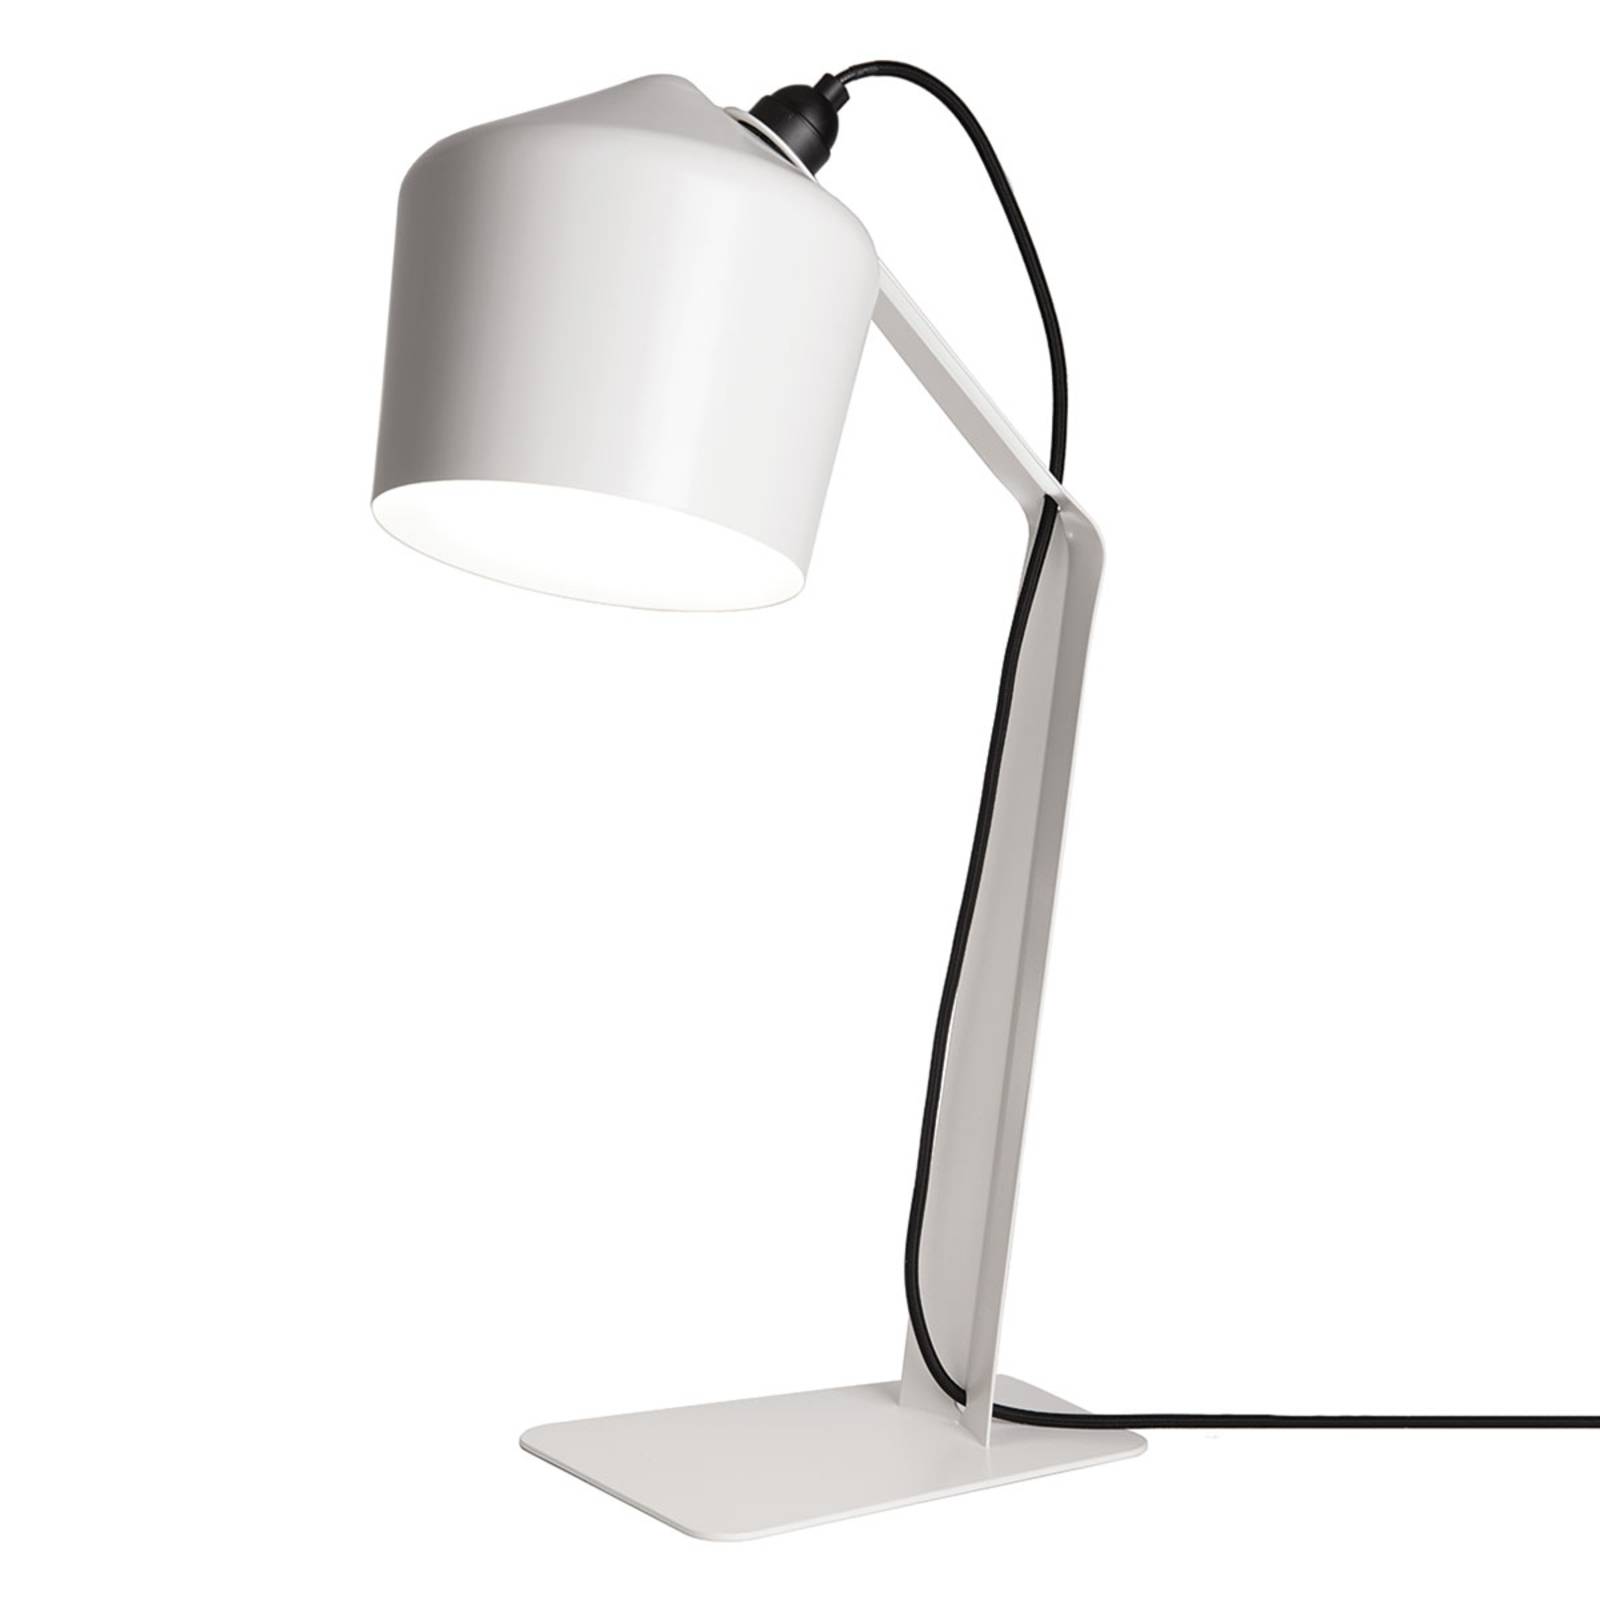 Image of Innolux Pasila lampe à poser design blanc 6420611986298